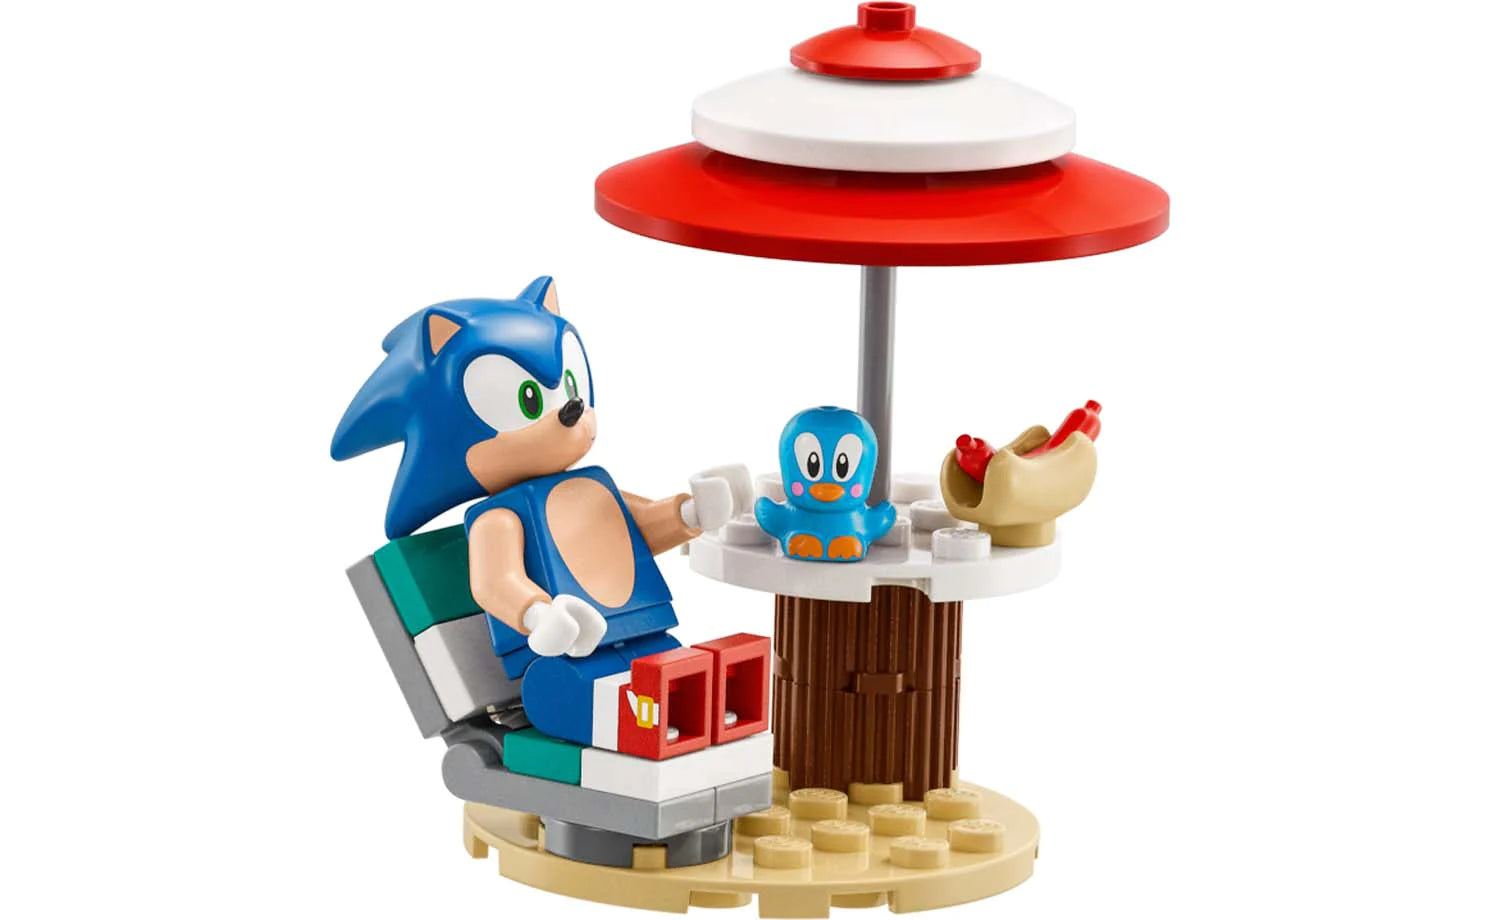 Sonic's Speed Sphere Challenge 76990